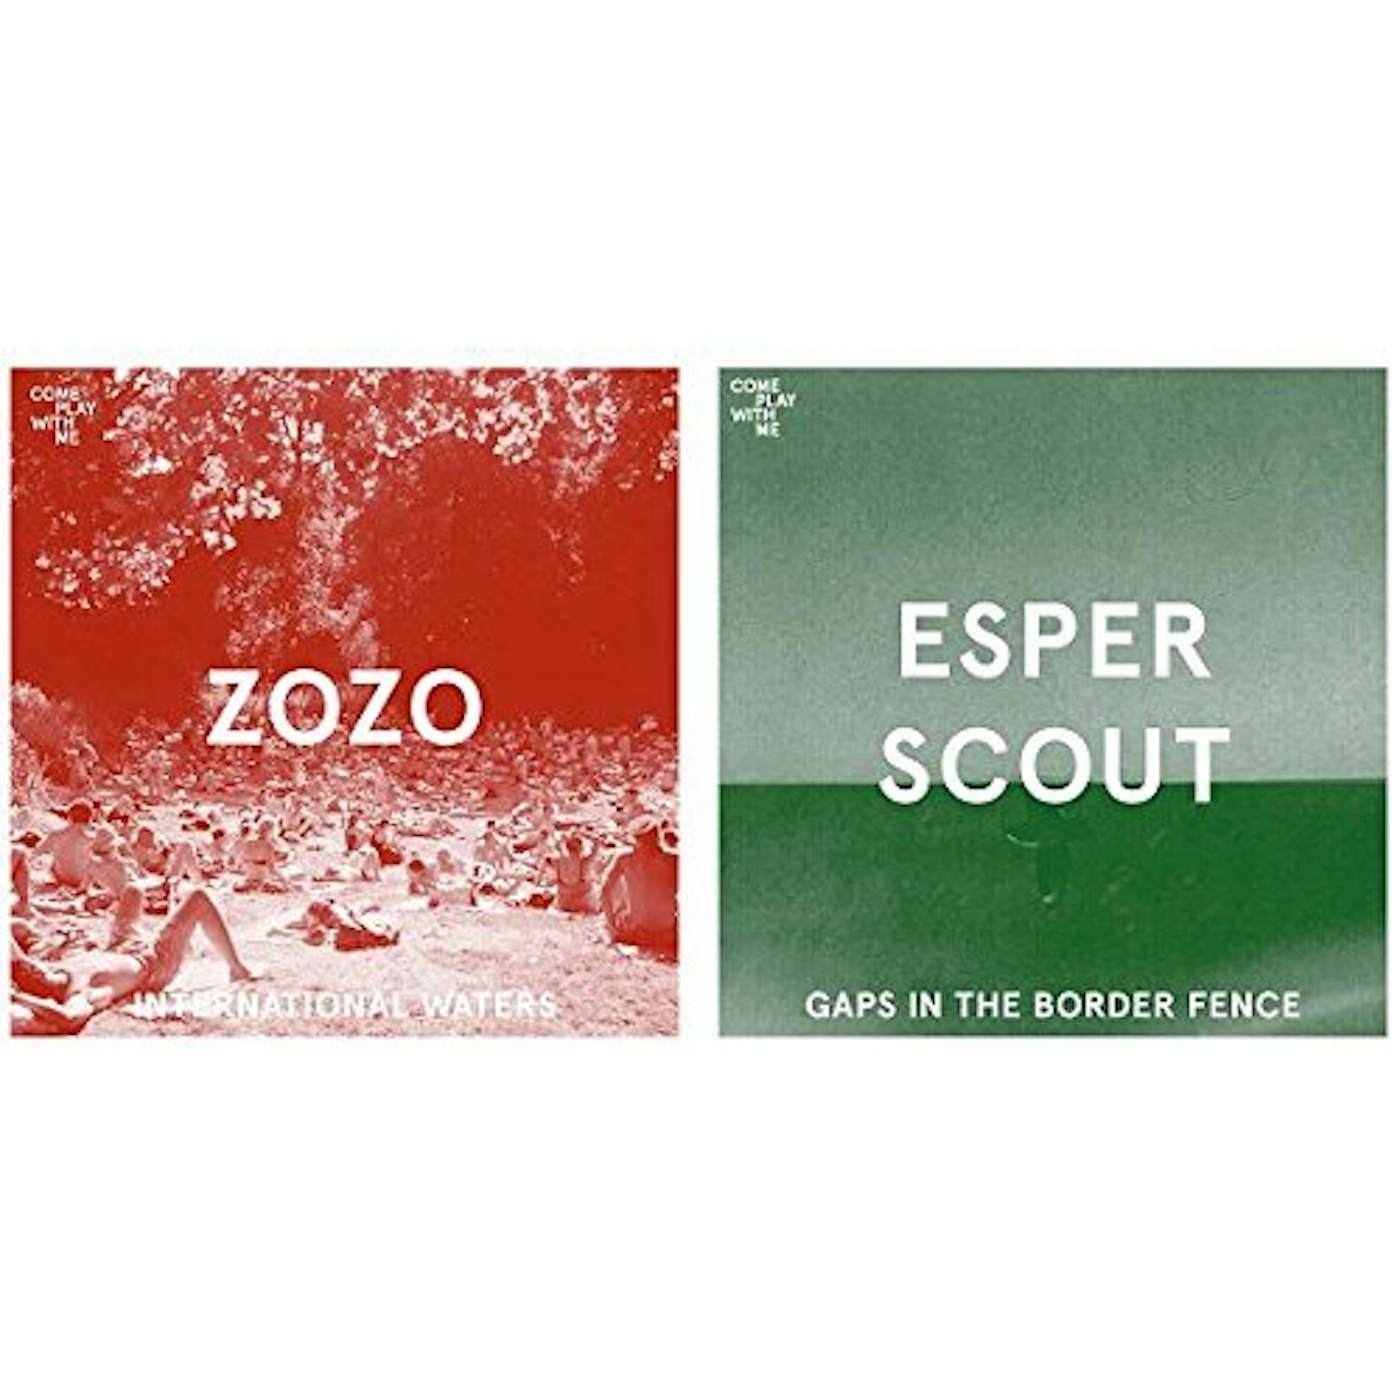 ZOZO / ESPER SCOUT INTERNATIONAL WATERS / GAPS IN THE BORDER FENCE Vinyl Record